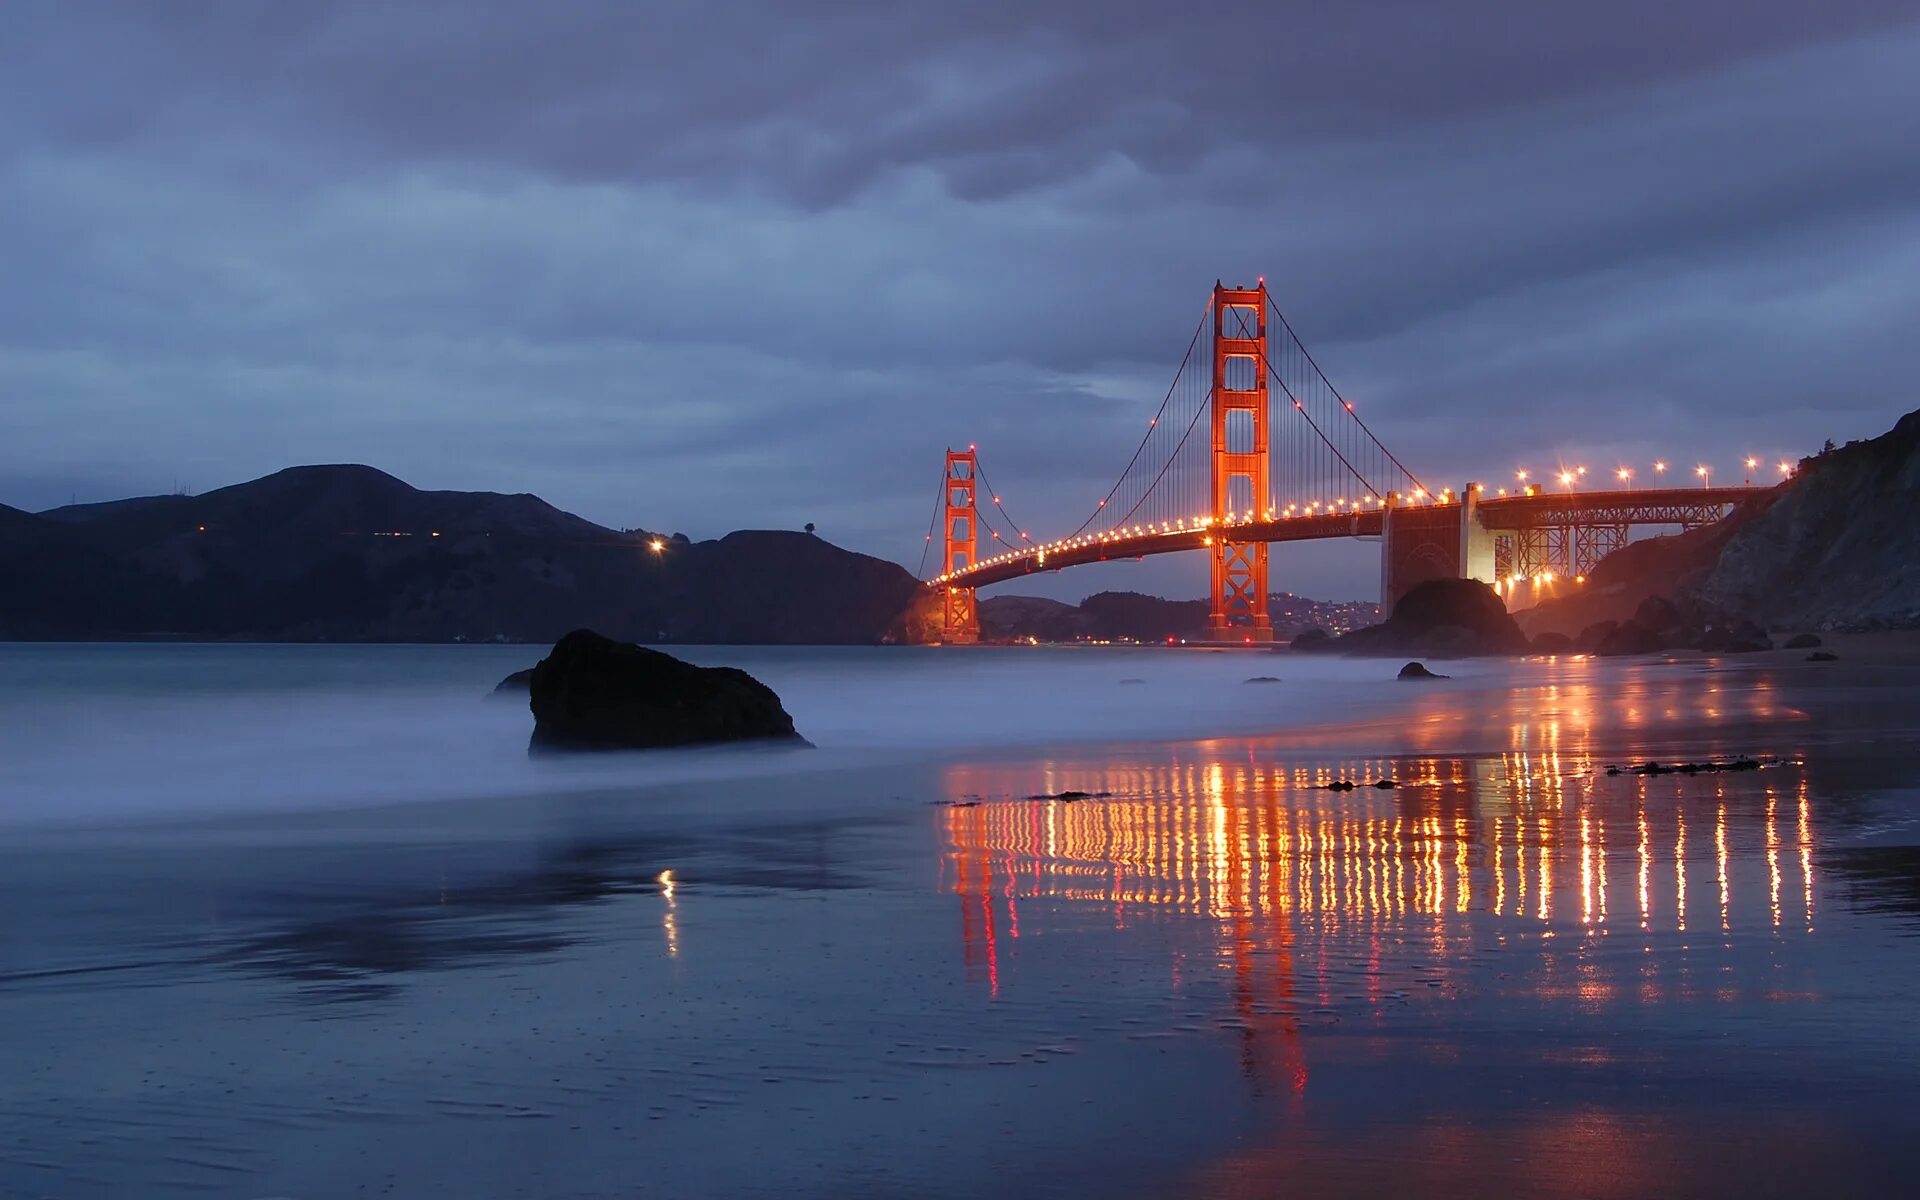 Мост золотые ворота (г. Сан-Франциско). Мост Сан Франциско и Владивосток. Мост золотые ворота во Владивостоке. Мост золотые ворота в Сан-Франциско вечером.